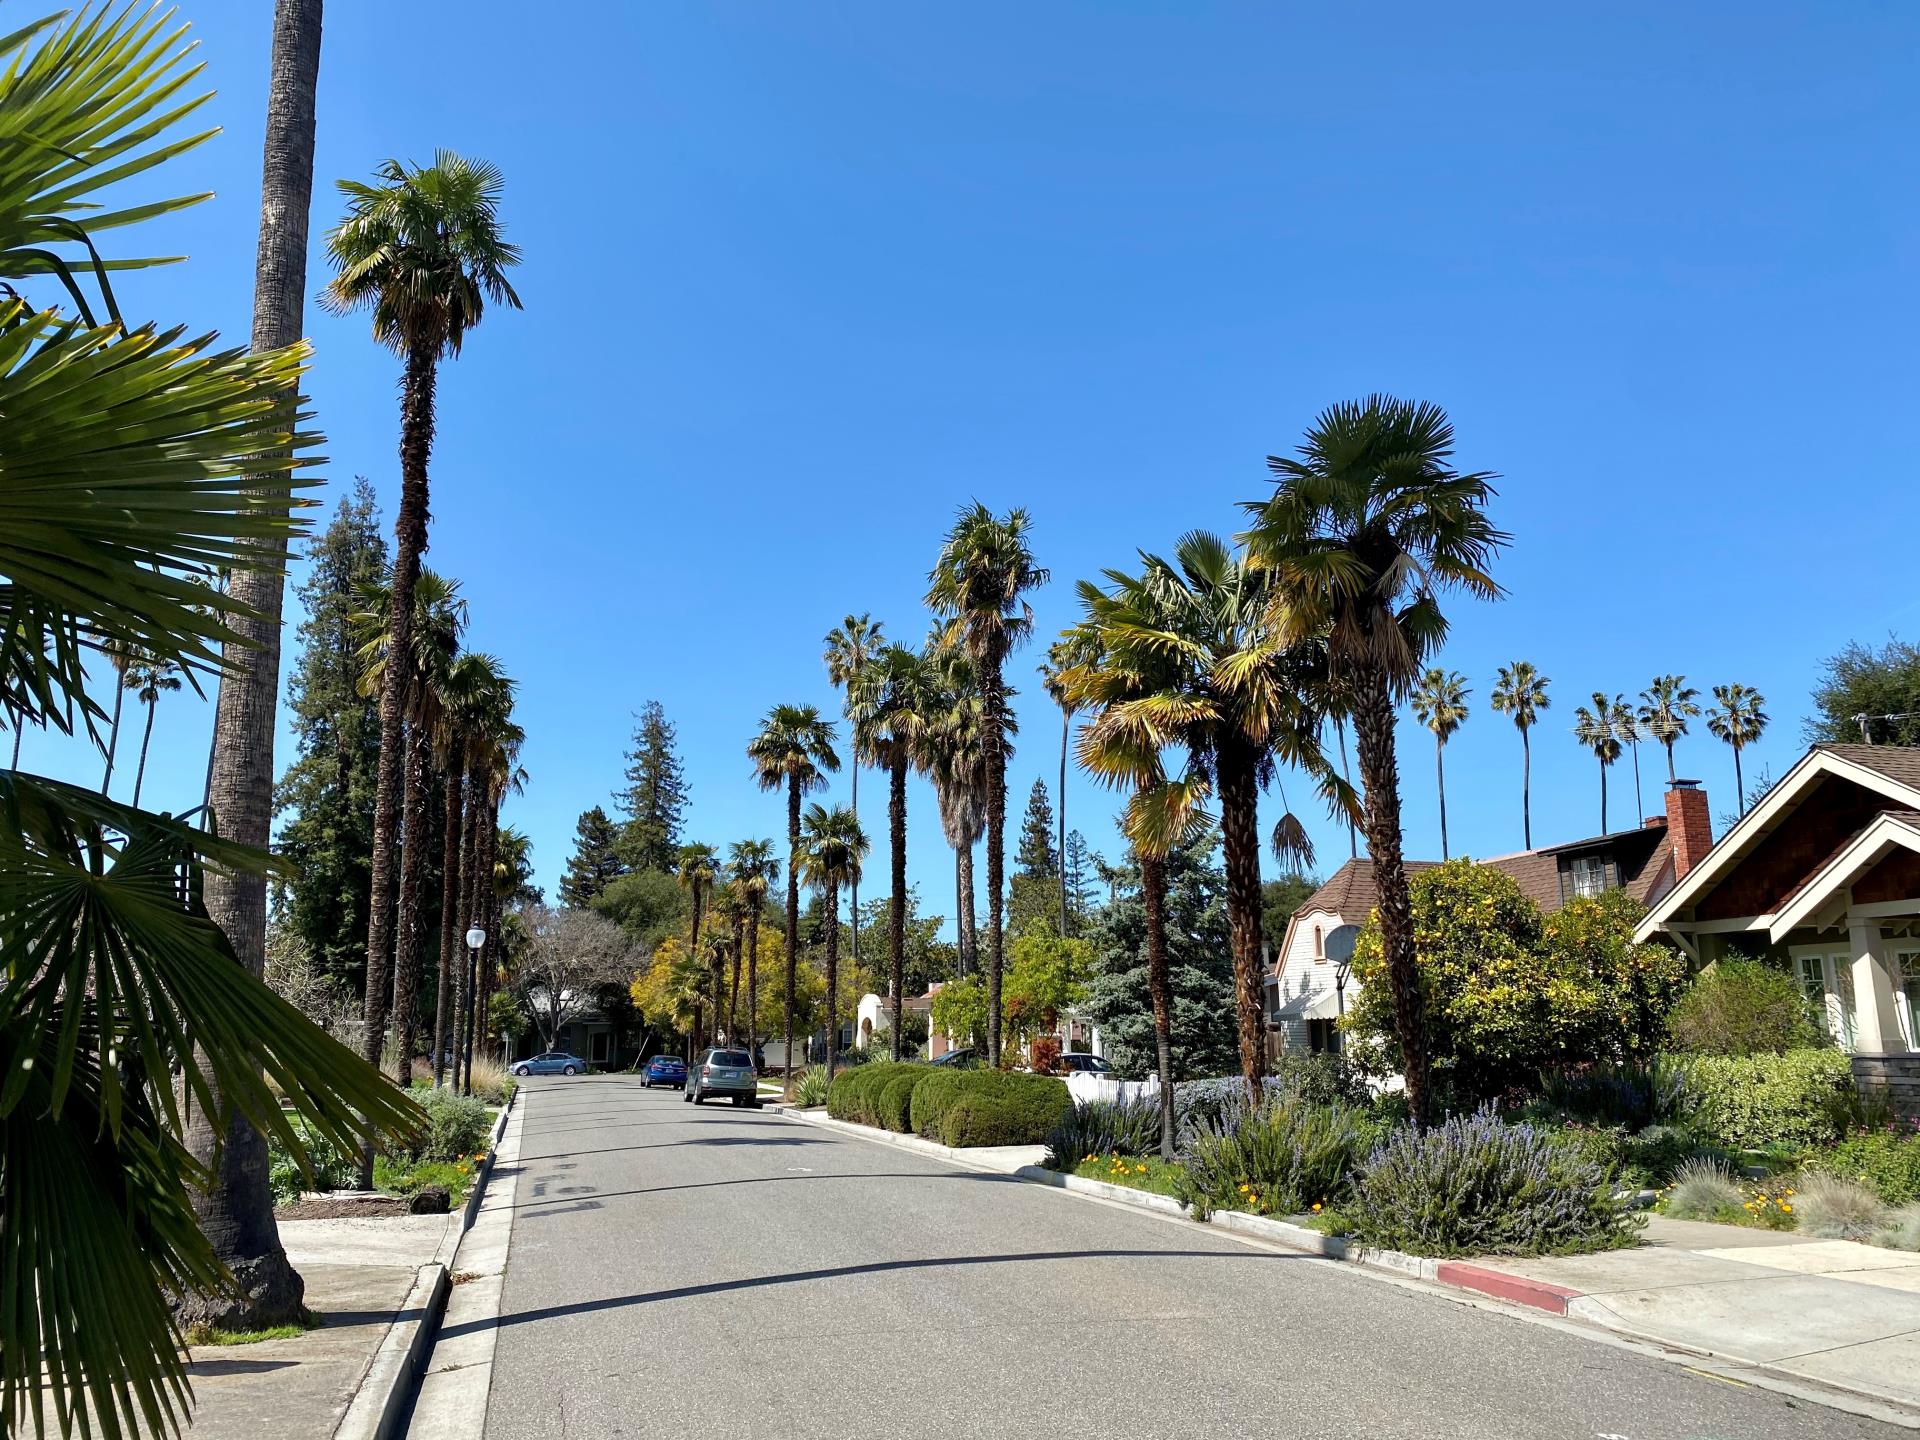 Mv neighborhood with palm trees